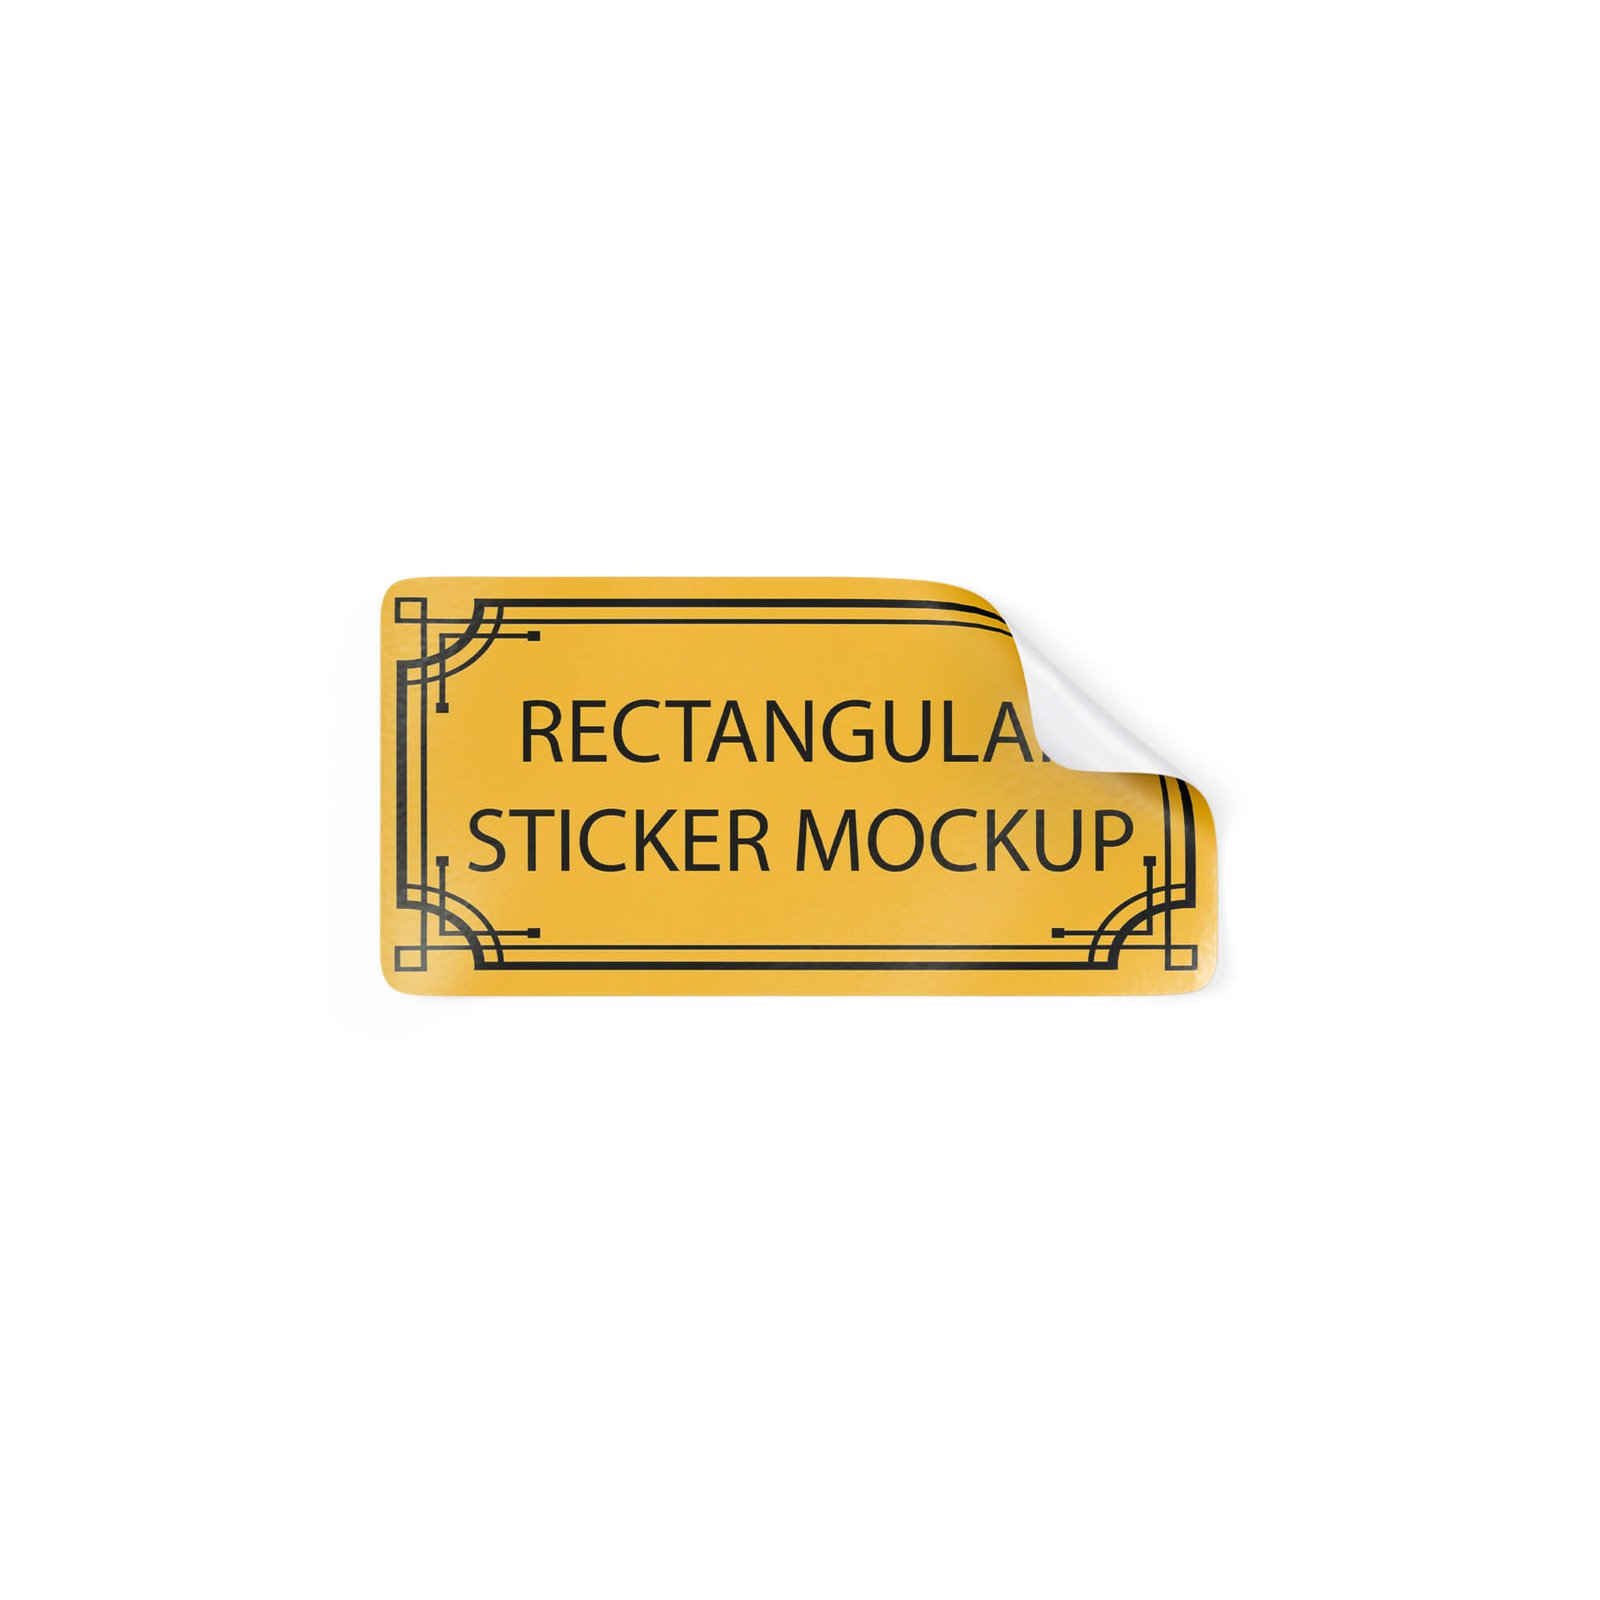 Design Free Rectangular Sticker Mockup PSD Template